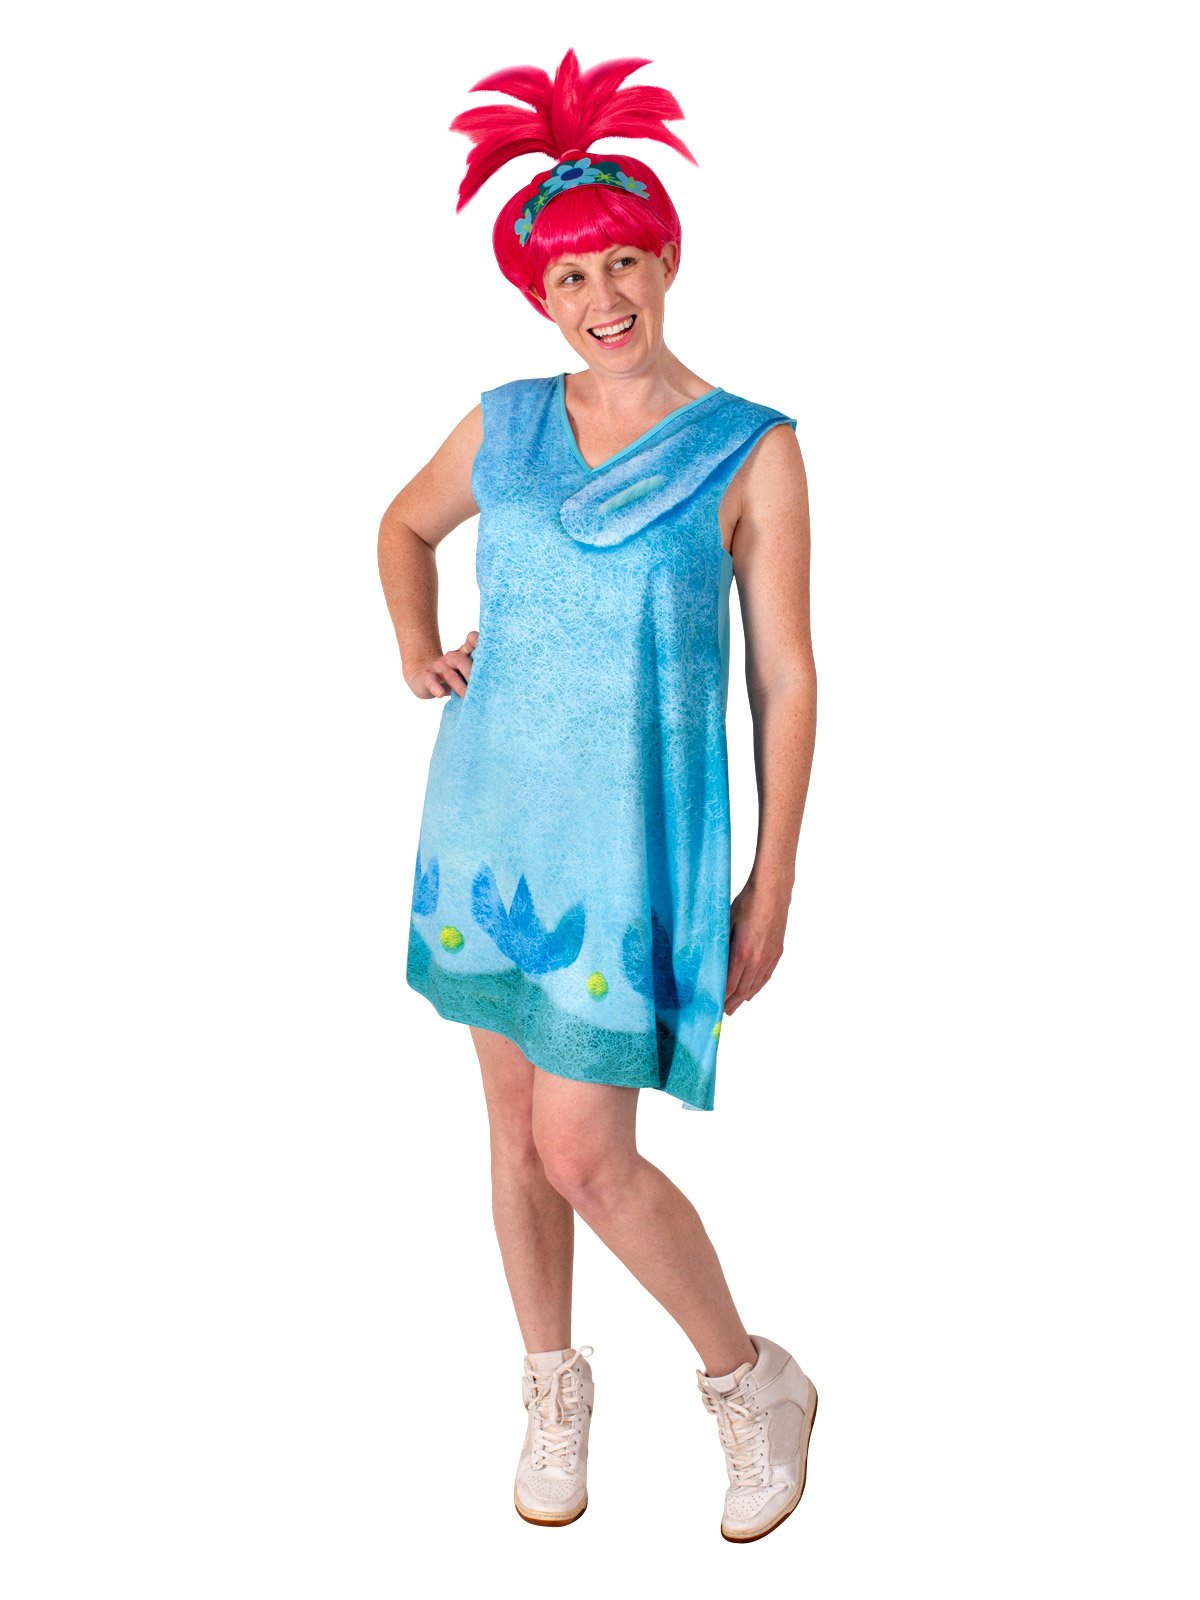 Costume Adult Trolls Poppy 2 Adult Large Dress & Wig